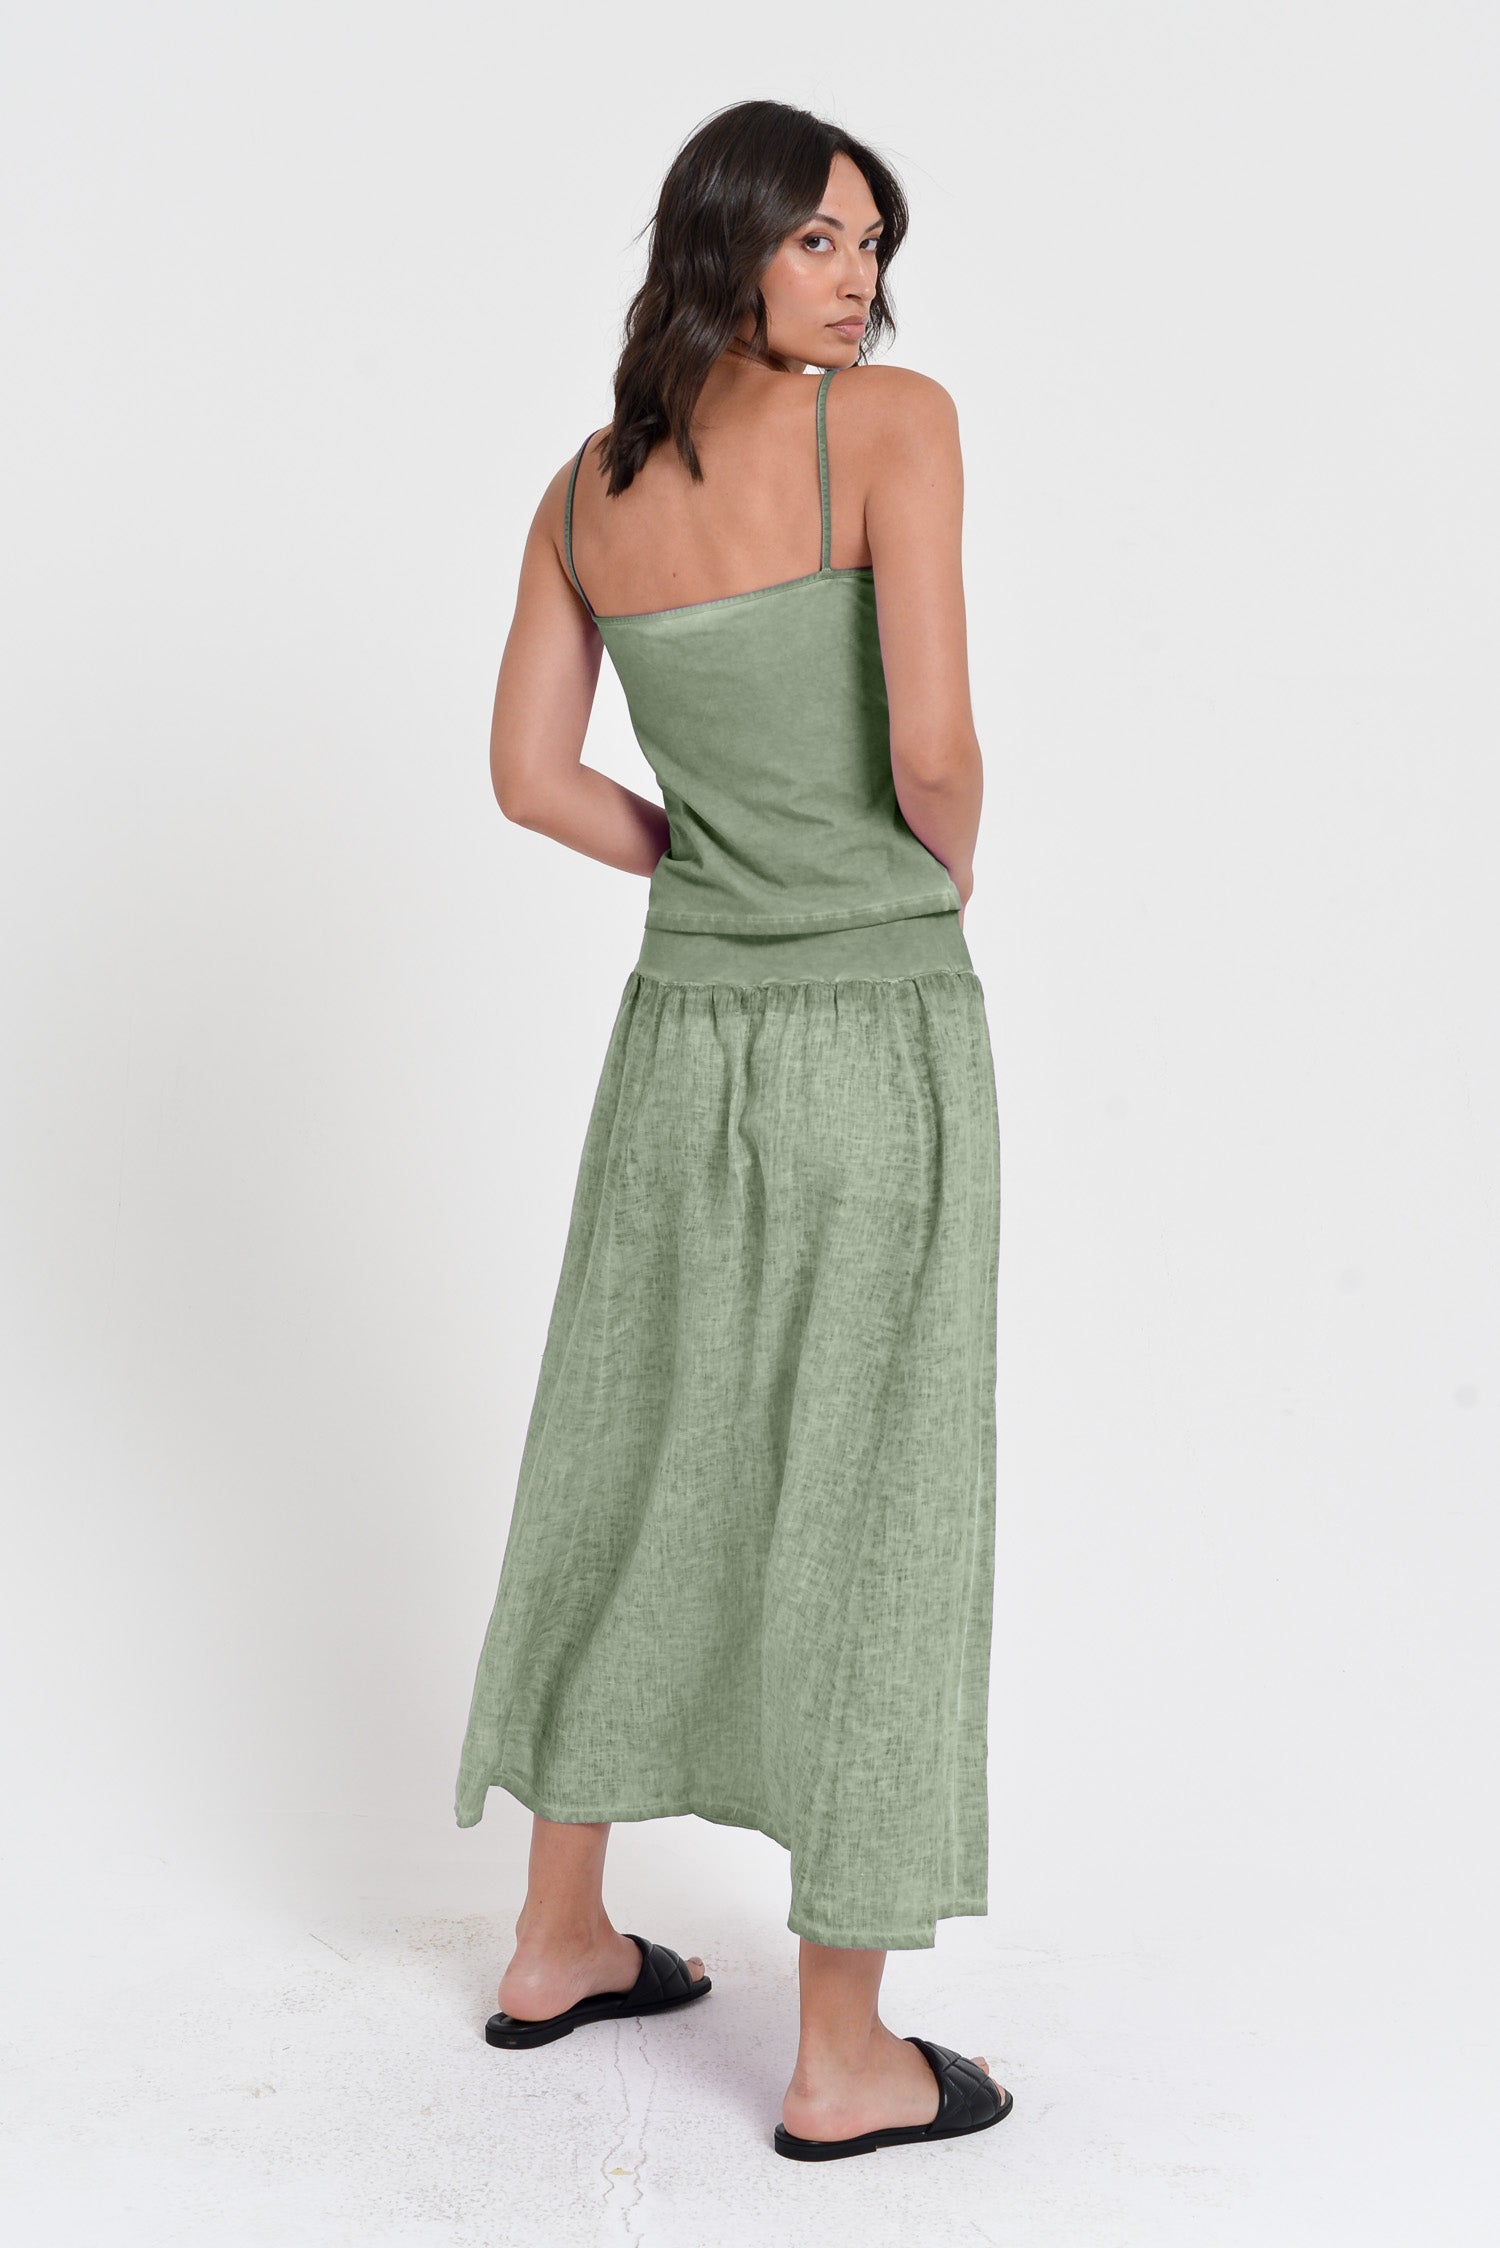 Maxime Skirt - Women's Breezy Linen Skirt - Palm